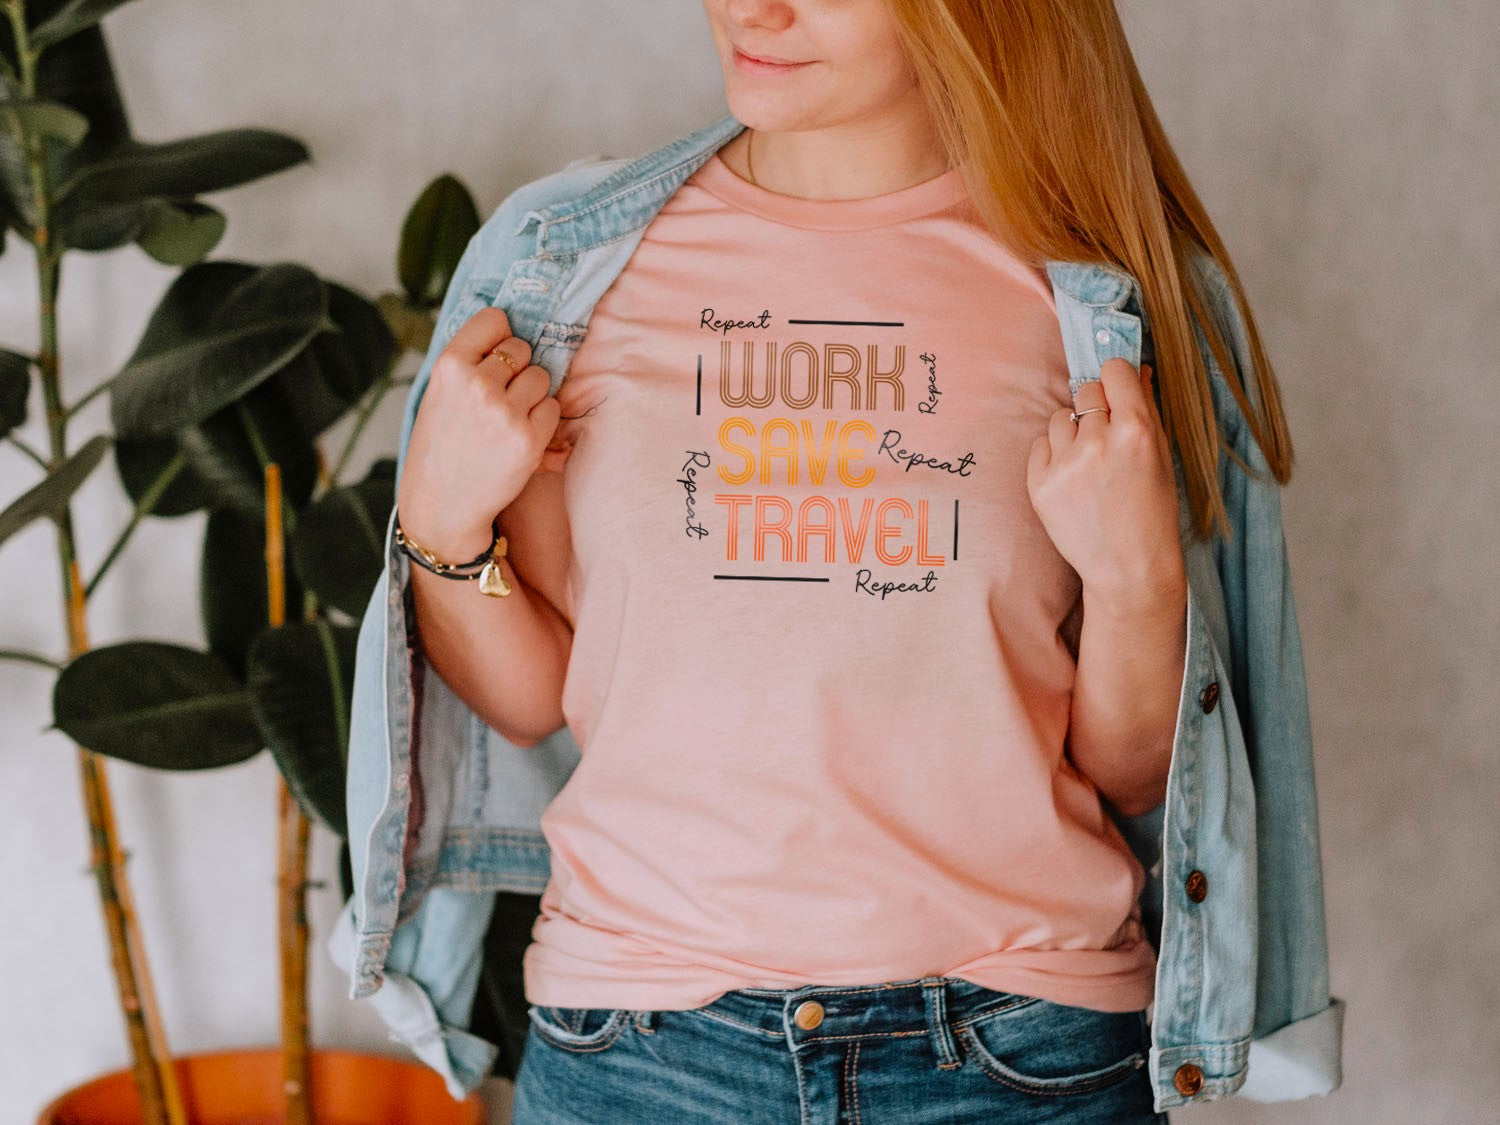 Work Save Travel Repeat T-shirt - Fun Work Motivation Inspiring Design Printed Tee Shirt